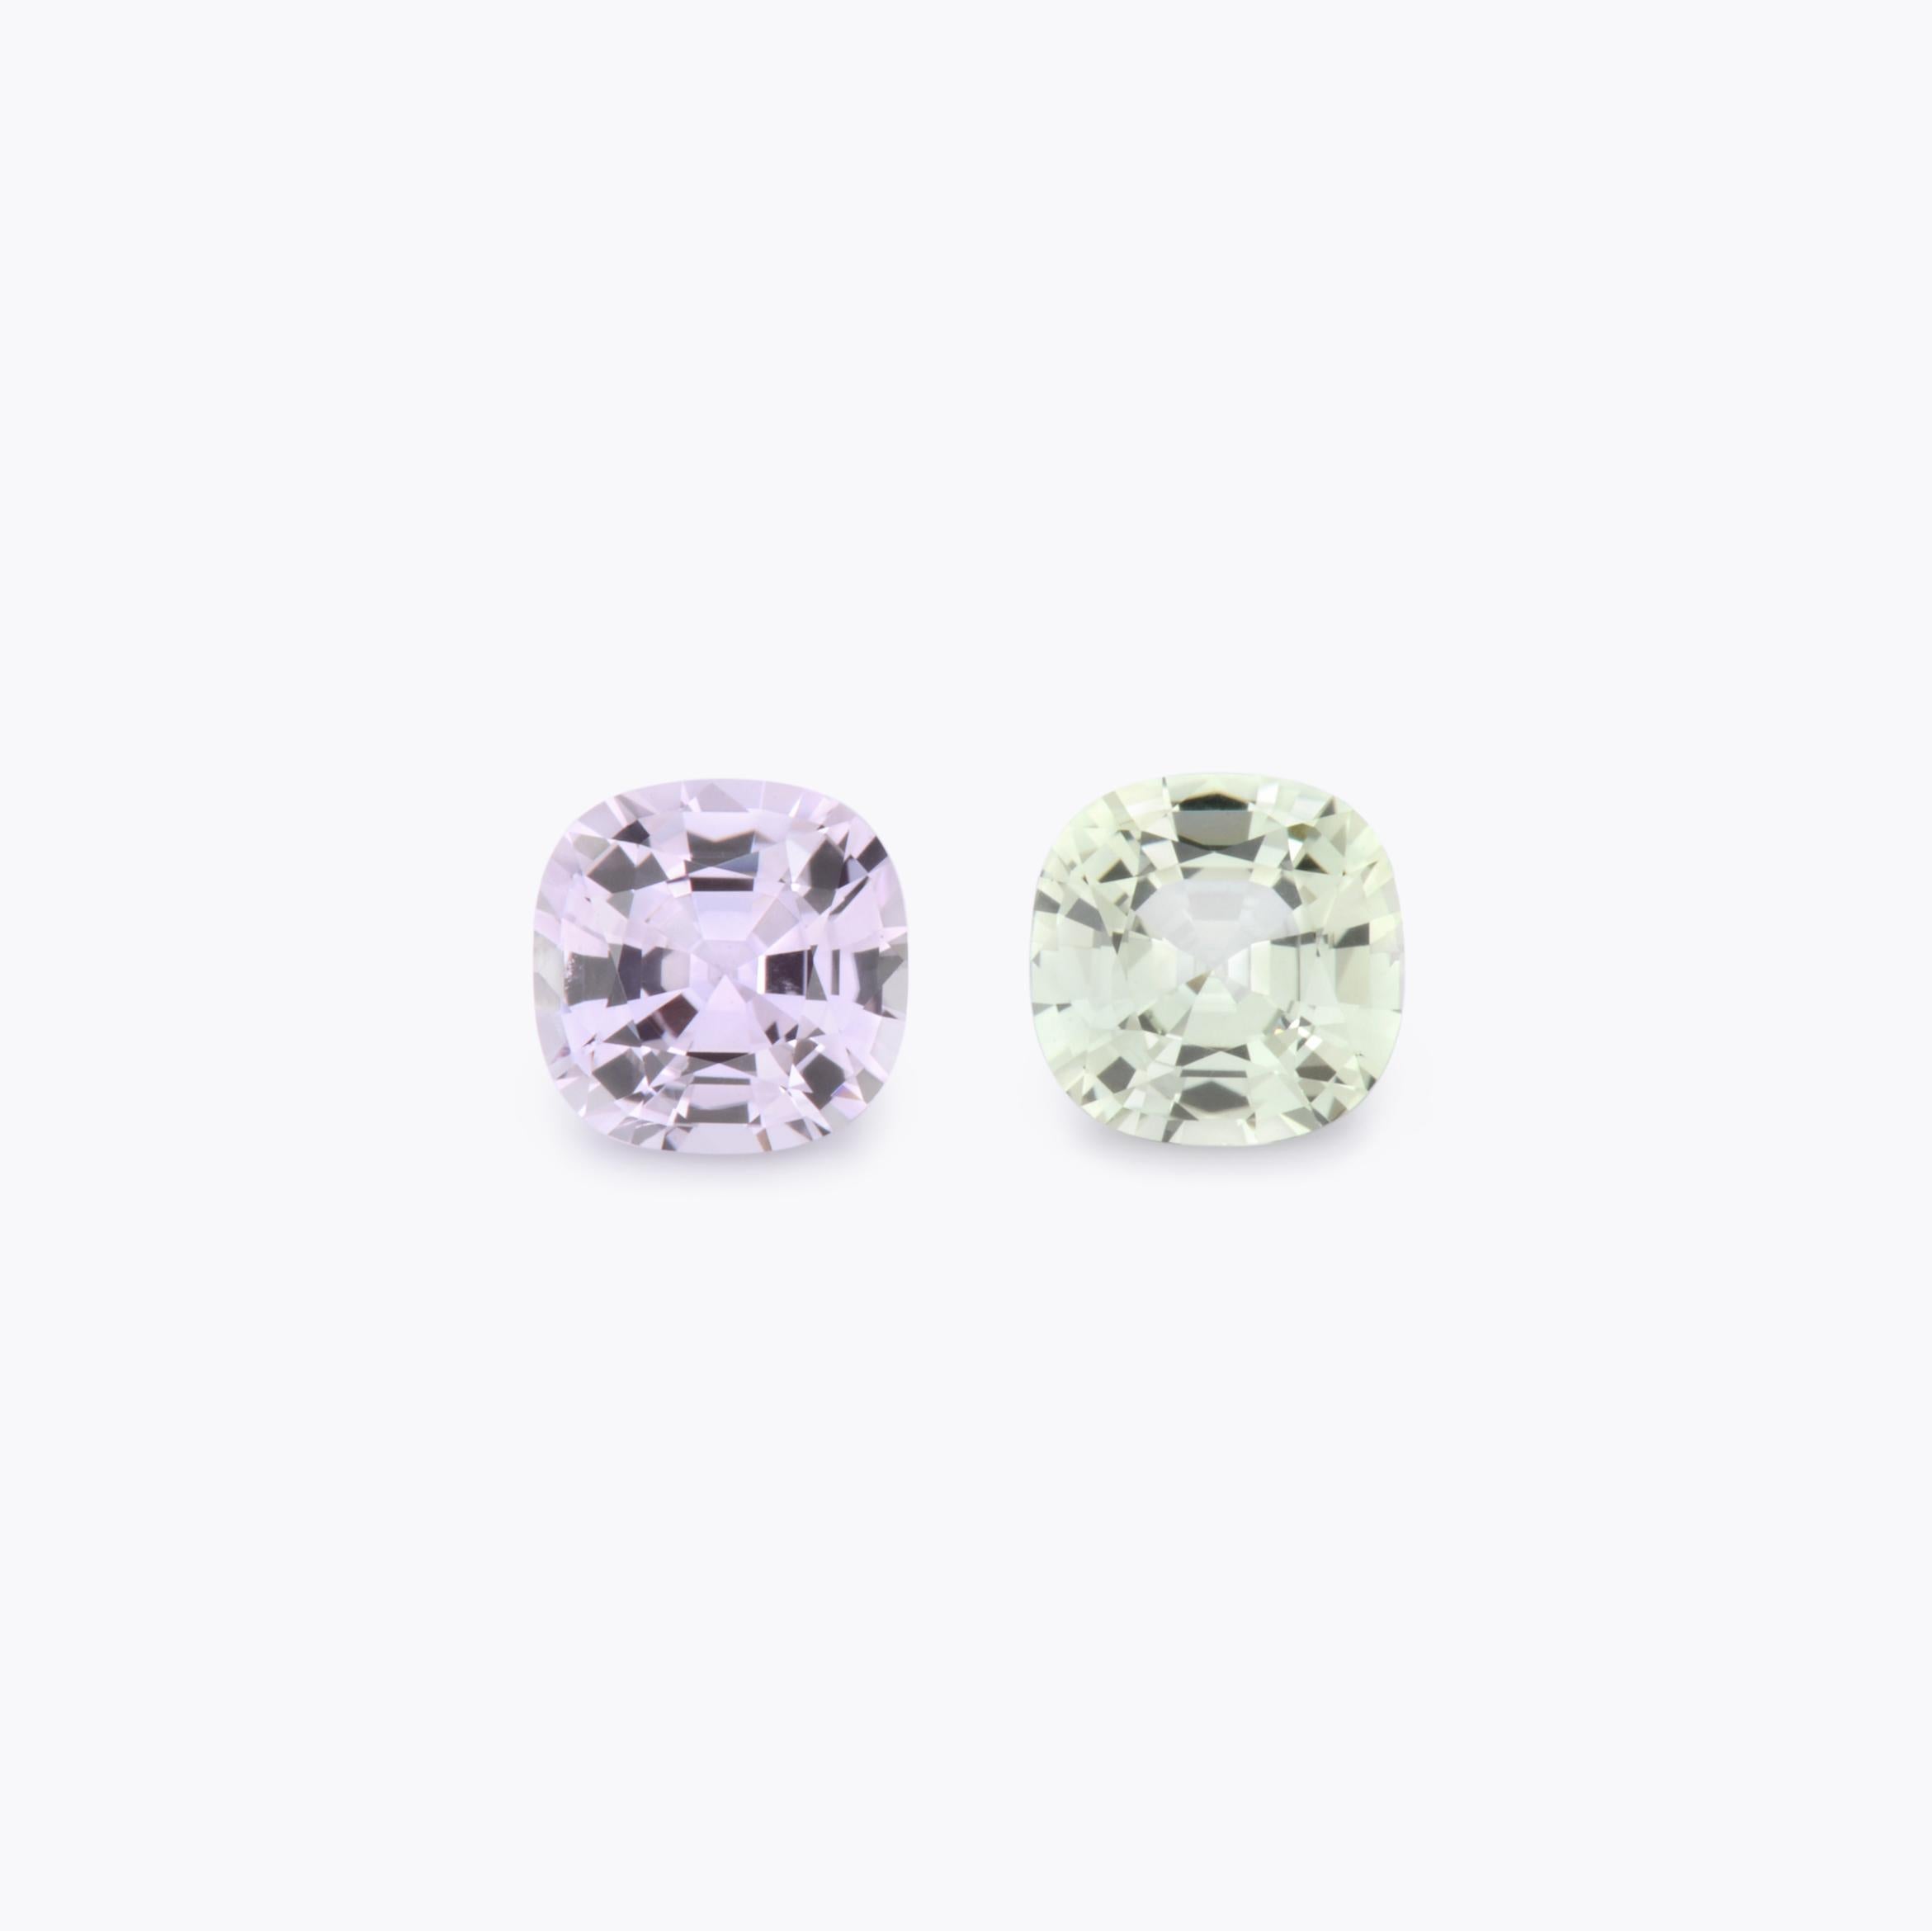 Contemporary Unheated Fancy Sapphire Ring Earrings Cushion Pair 2.25 Carat Loose Gemstones